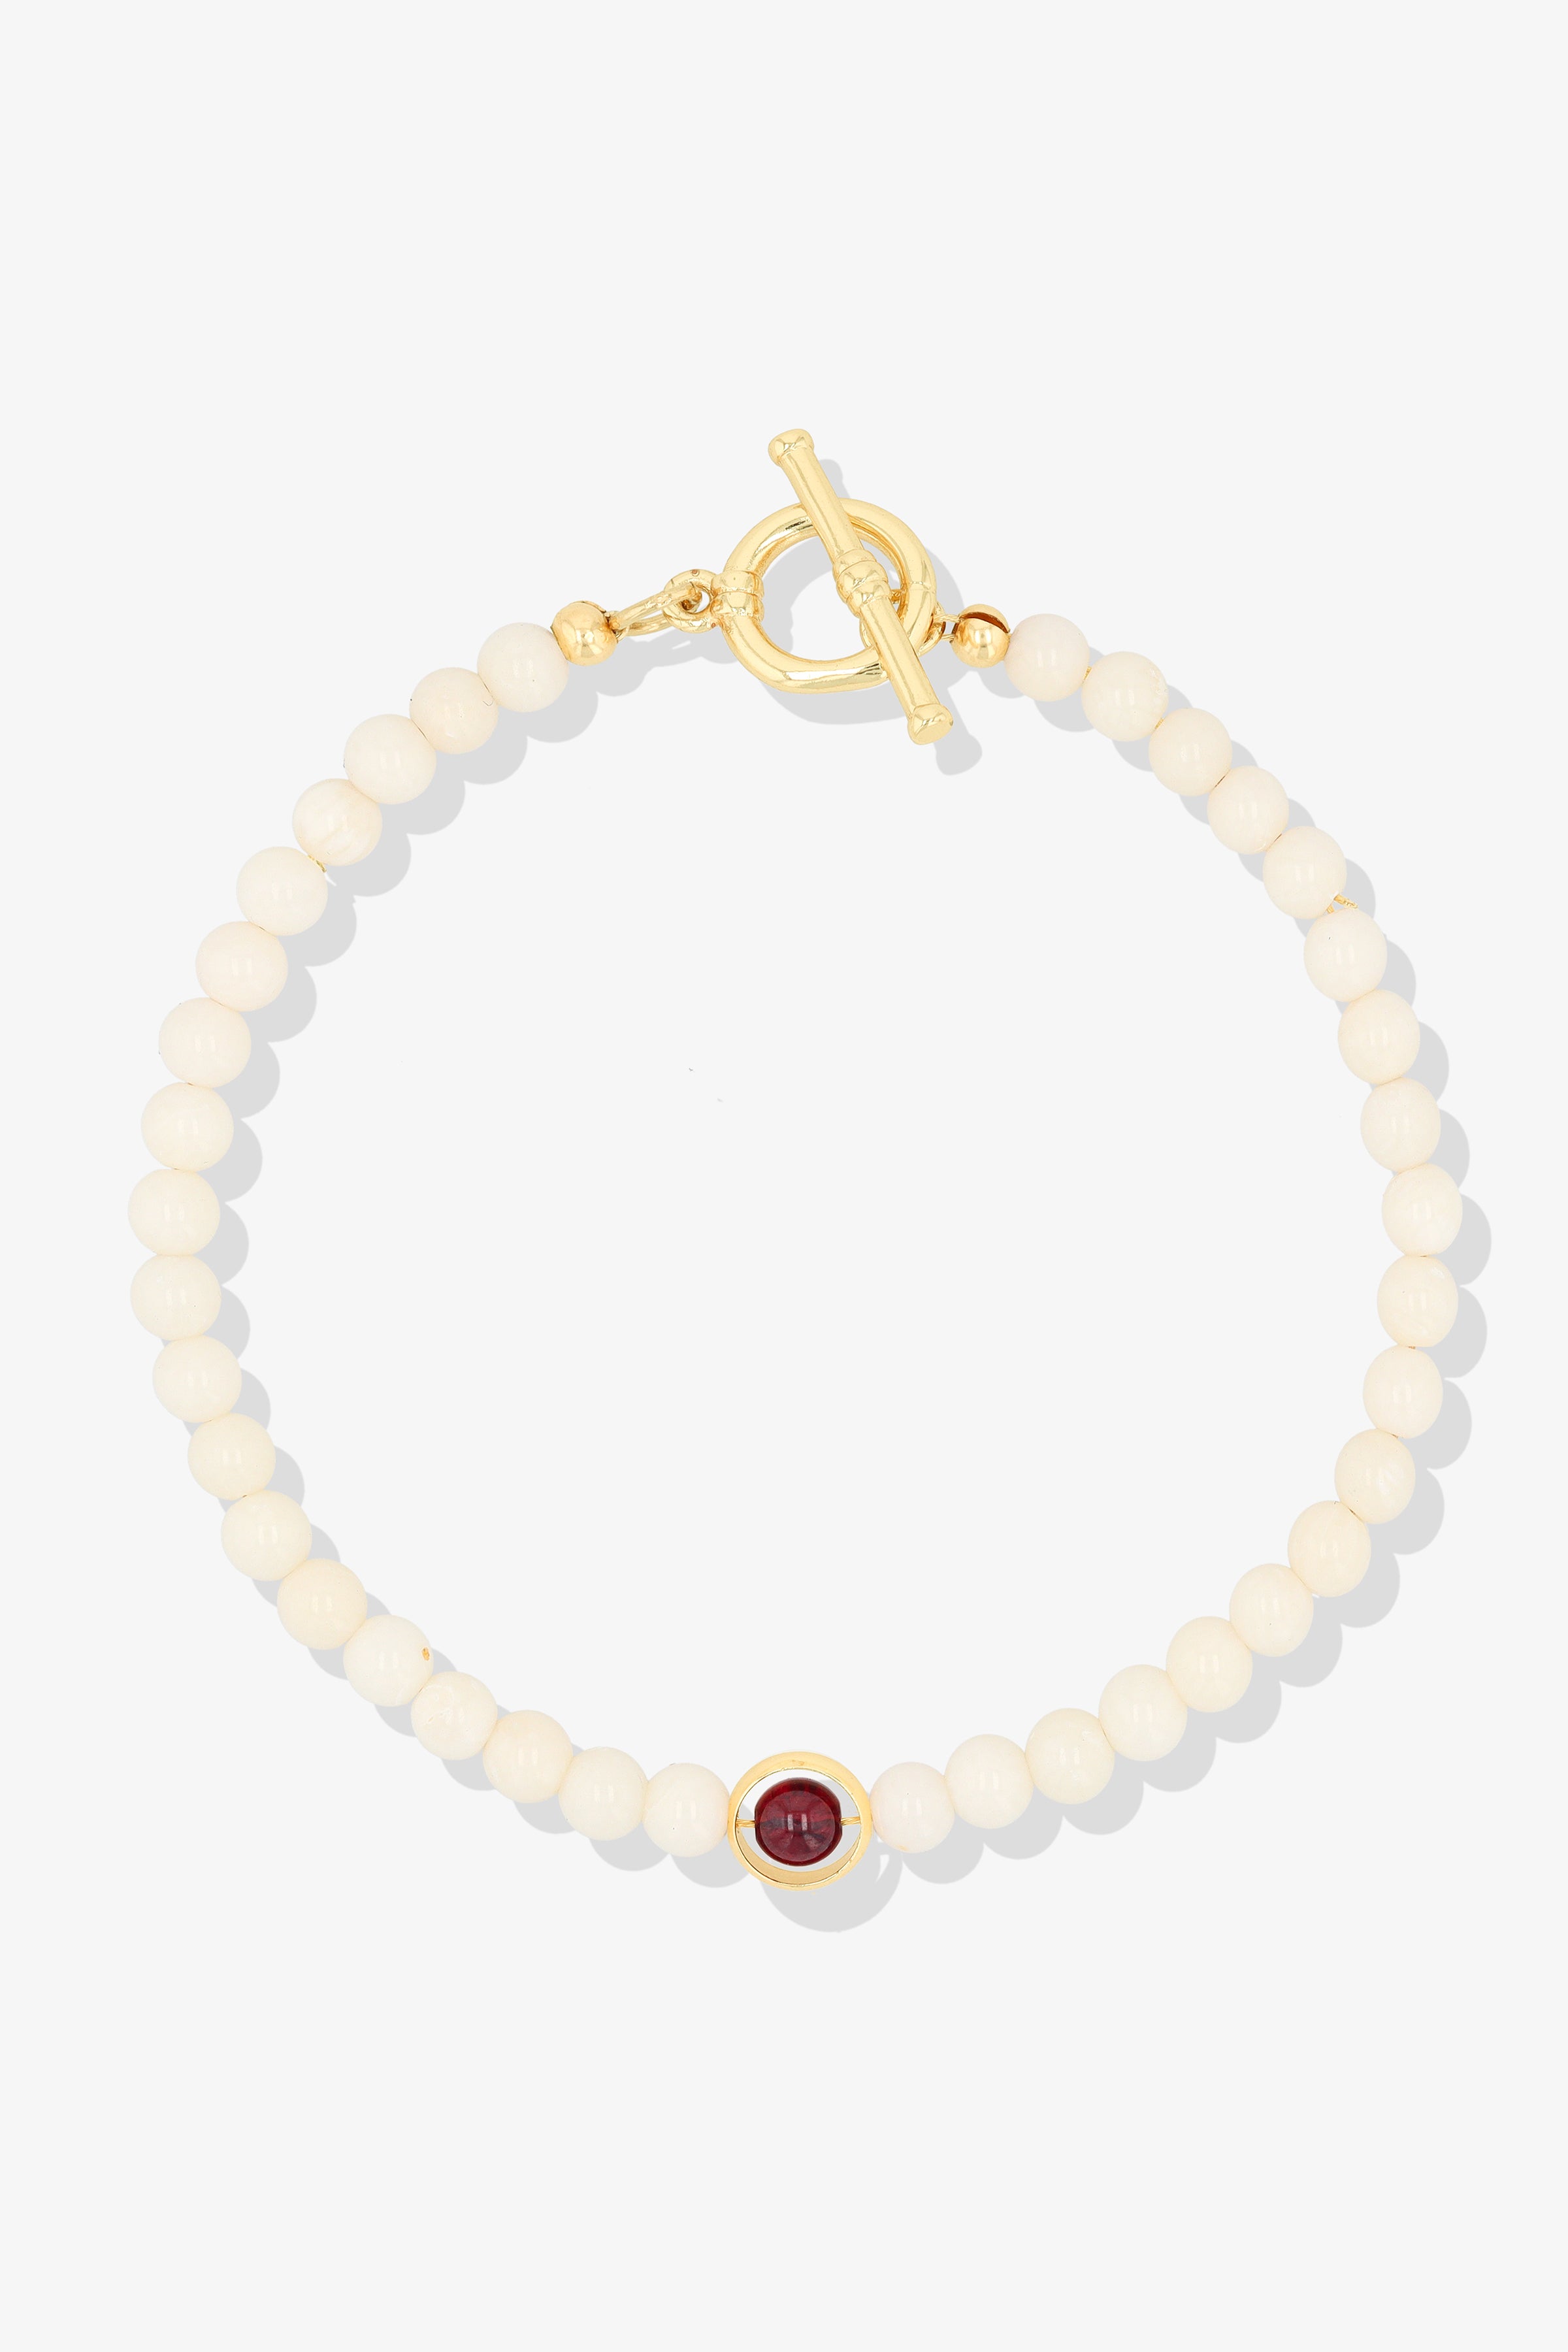 White Coral with Garnet Gold Vermeil Honor Bracelet